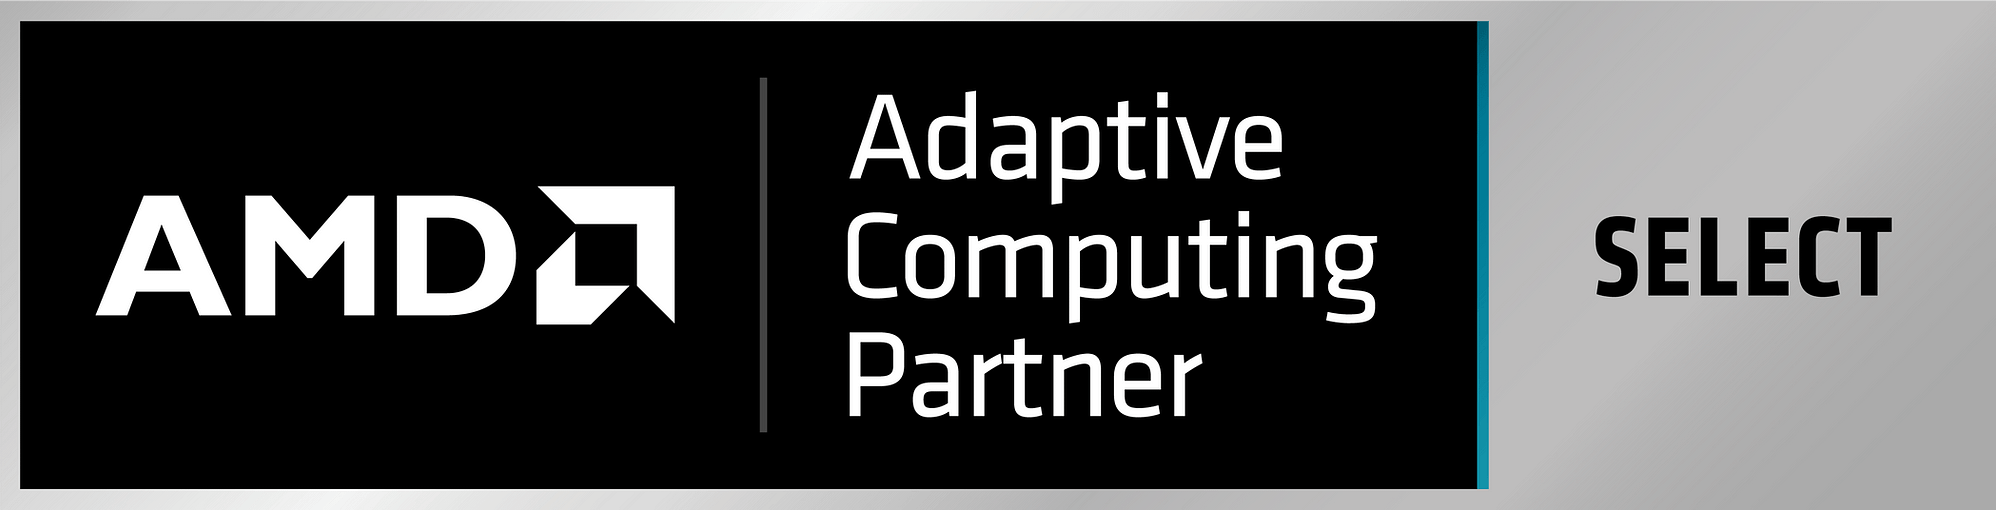 AMD Select Partner